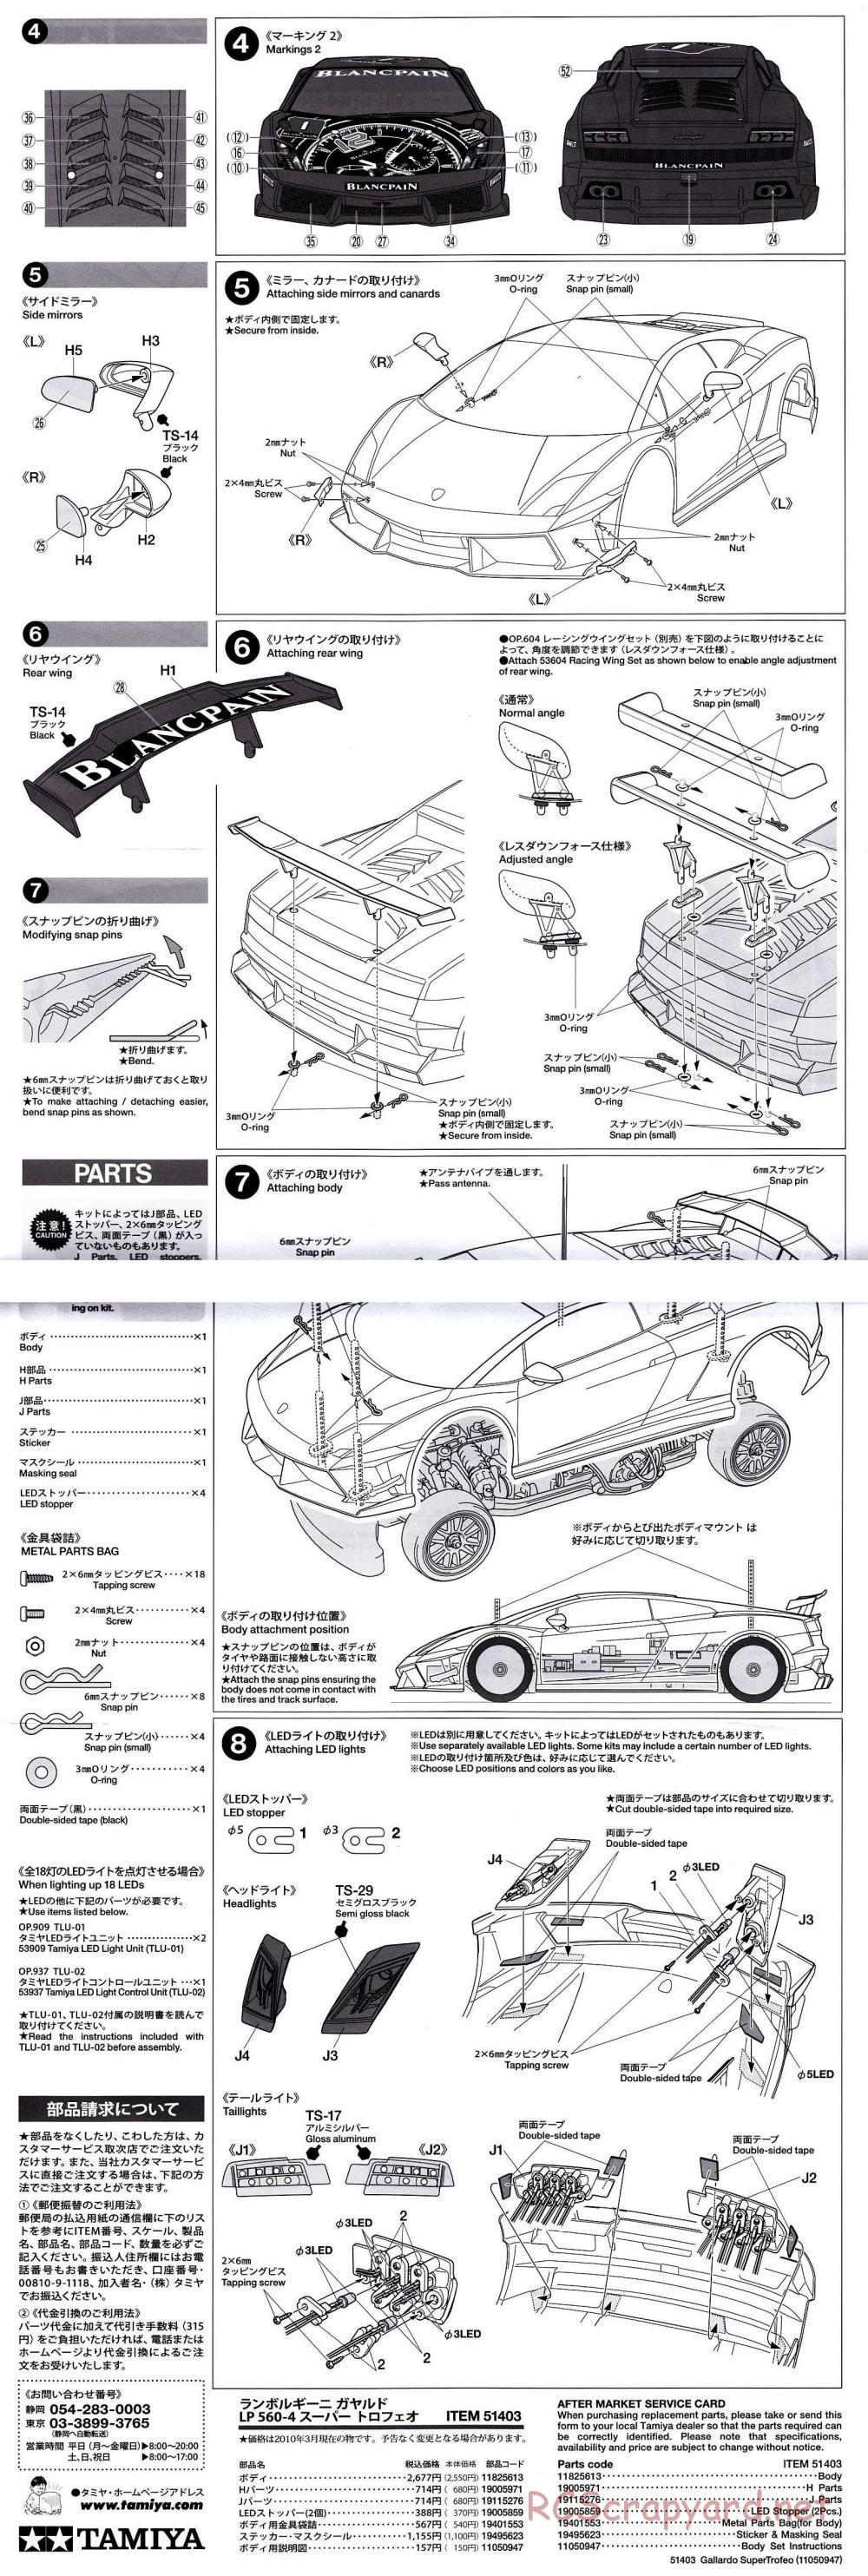 Tamiya - Lamborghini Gallardo LP560-4 Super Trofeo - TA05 Ver.II Chassis - Body Manual - Page 2